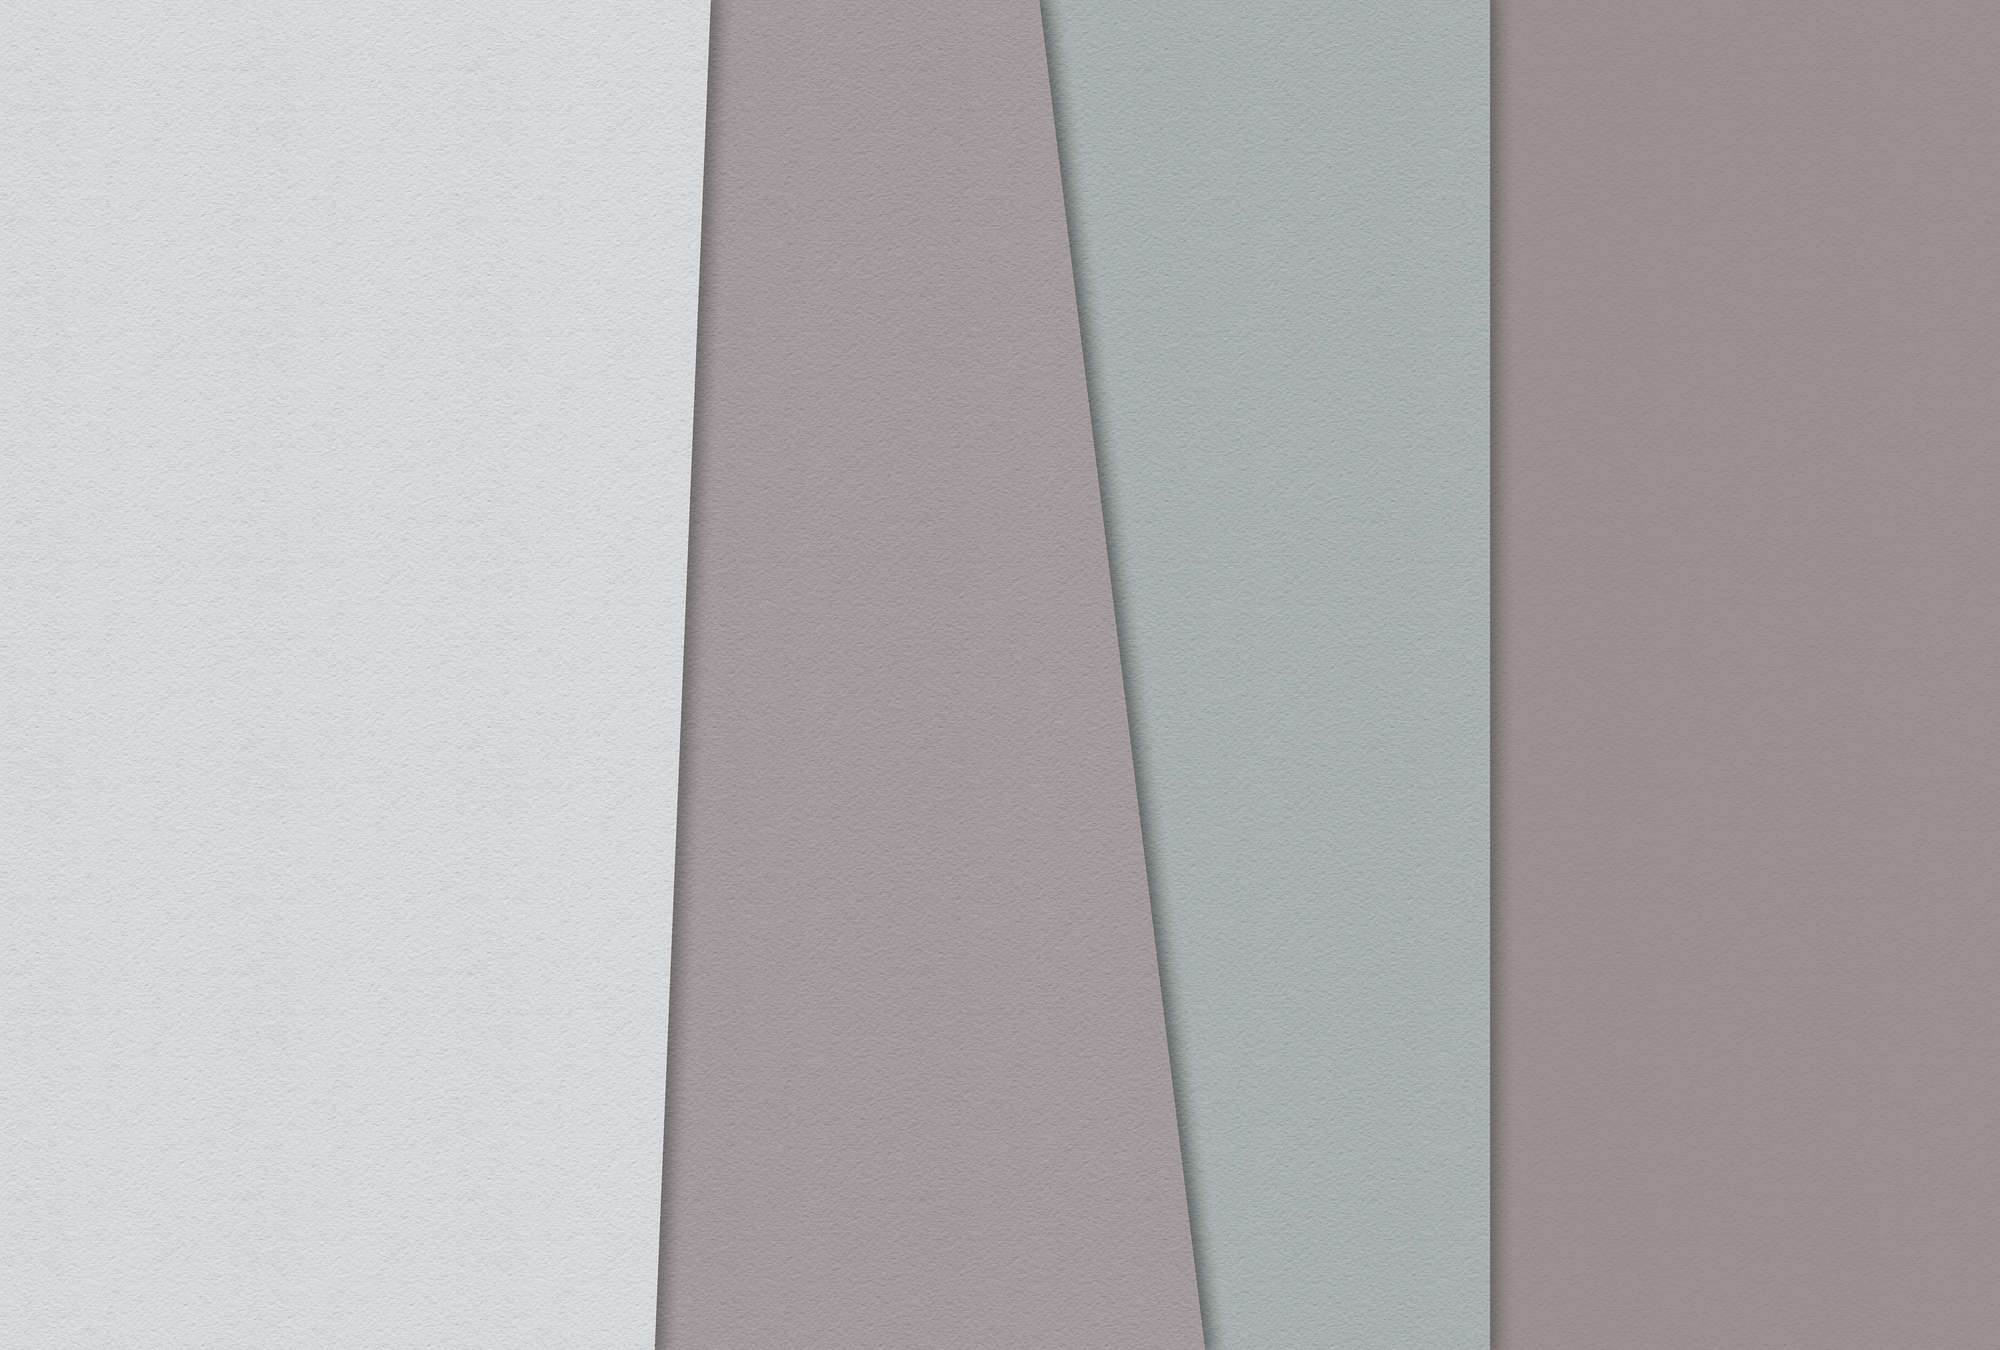             Layered paper 3 - Minimalist Wallpaper Colour Fields Handmade Paper Texture - Blue, Cream | Texture Non-woven
        